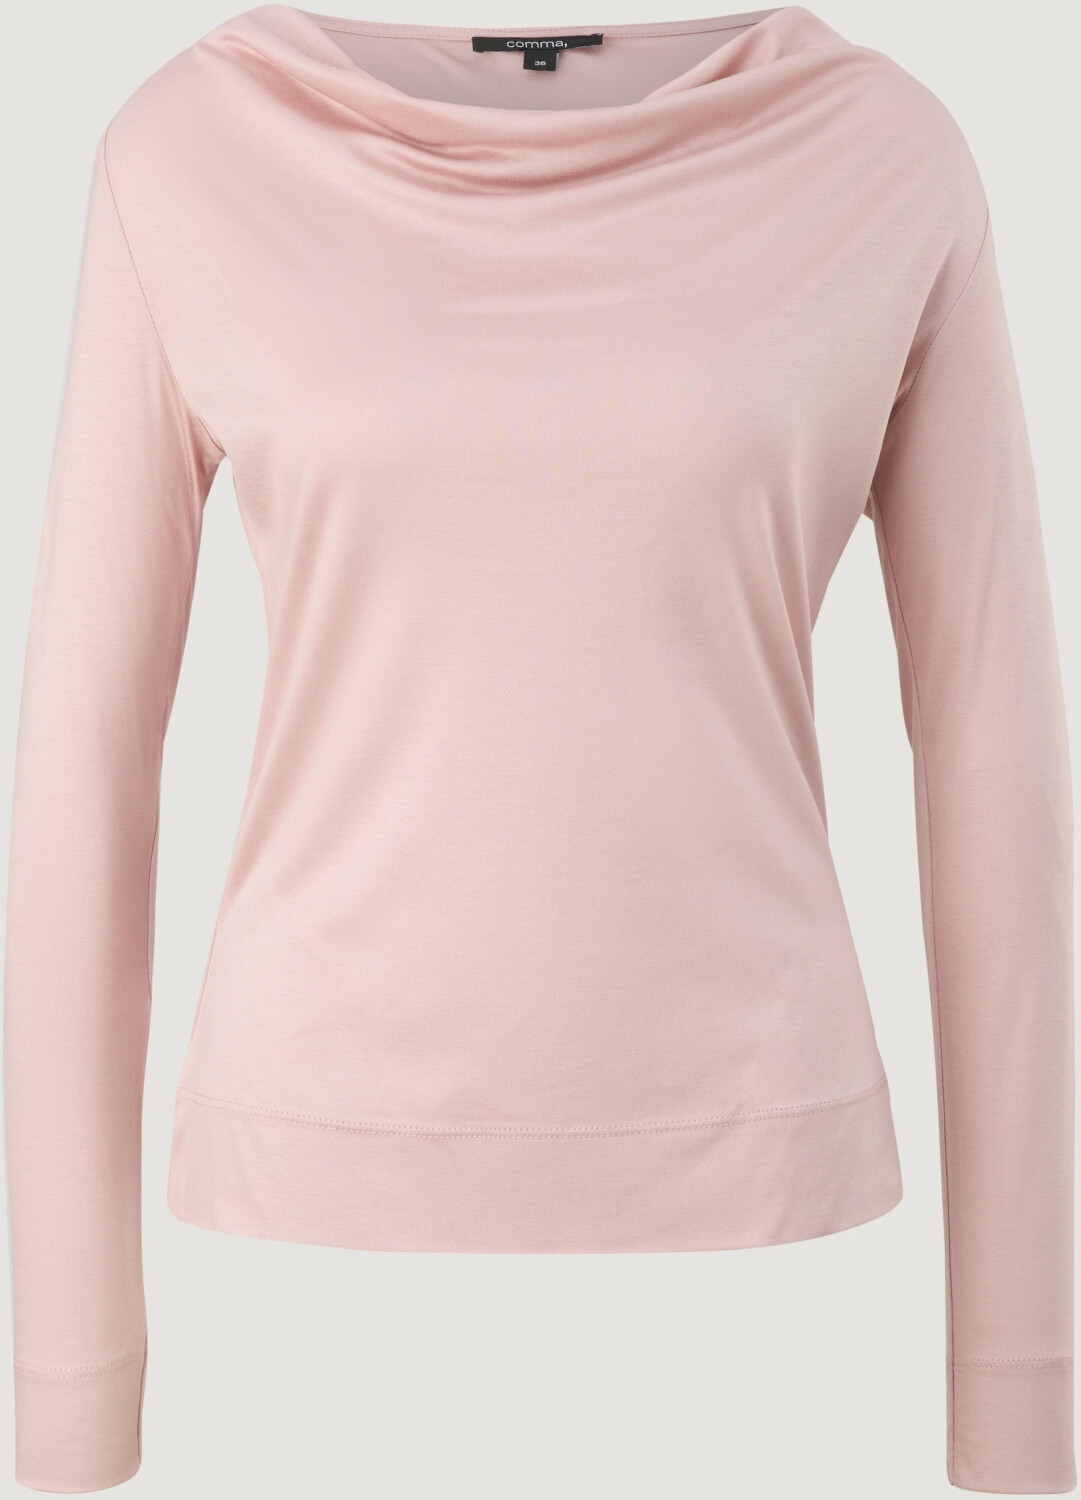 Preisvergleich mit Wasserfall-Ausschnitt Comma (2120634.4248) bei Viskose-Shirt ab € | 20,75 pink